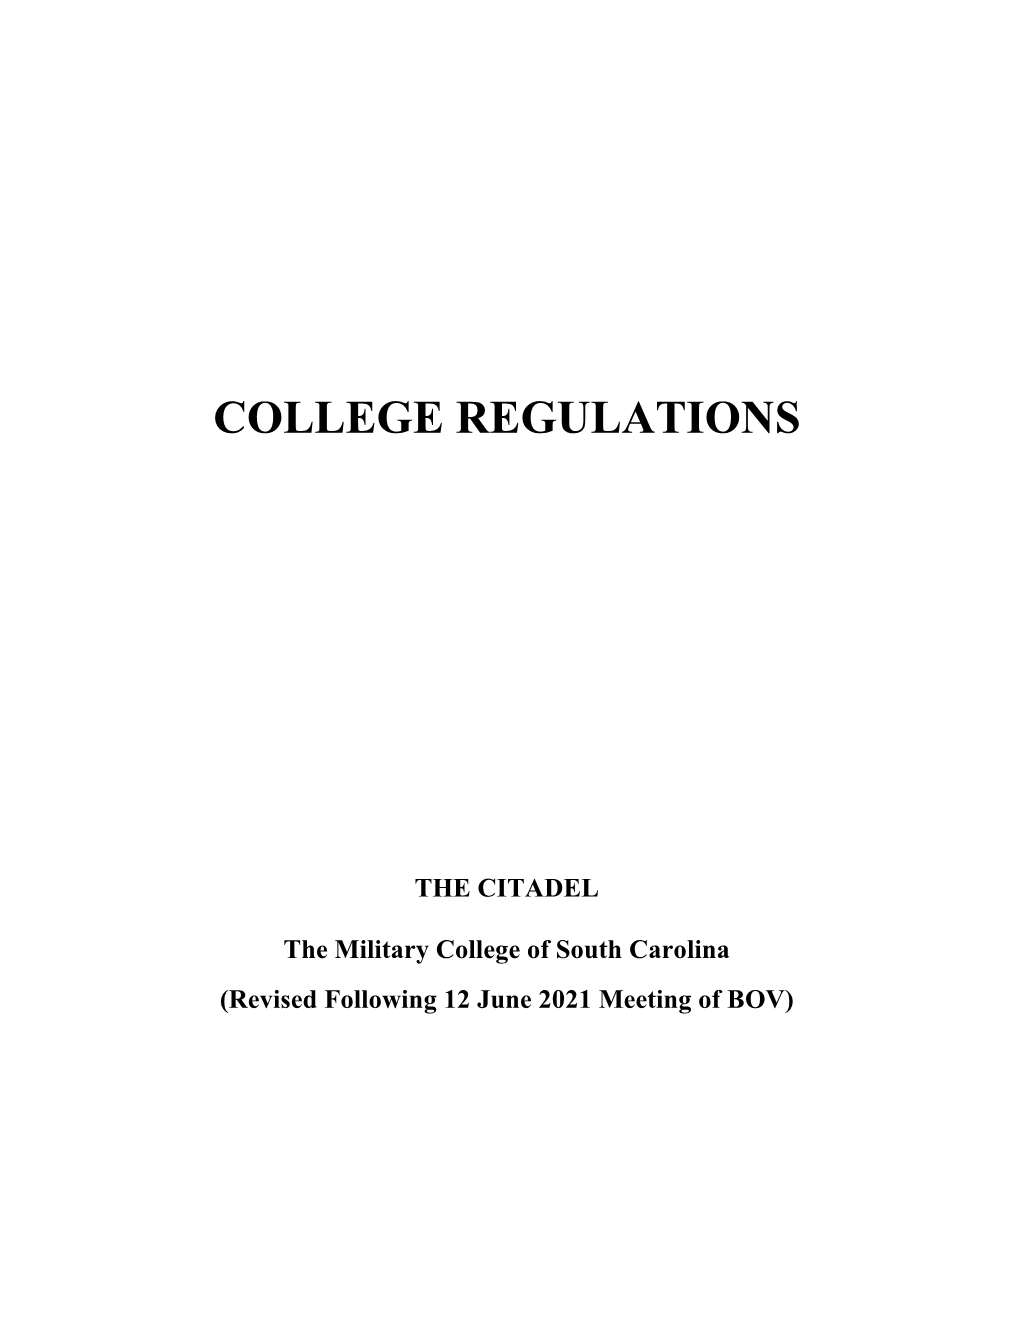 College Regulations